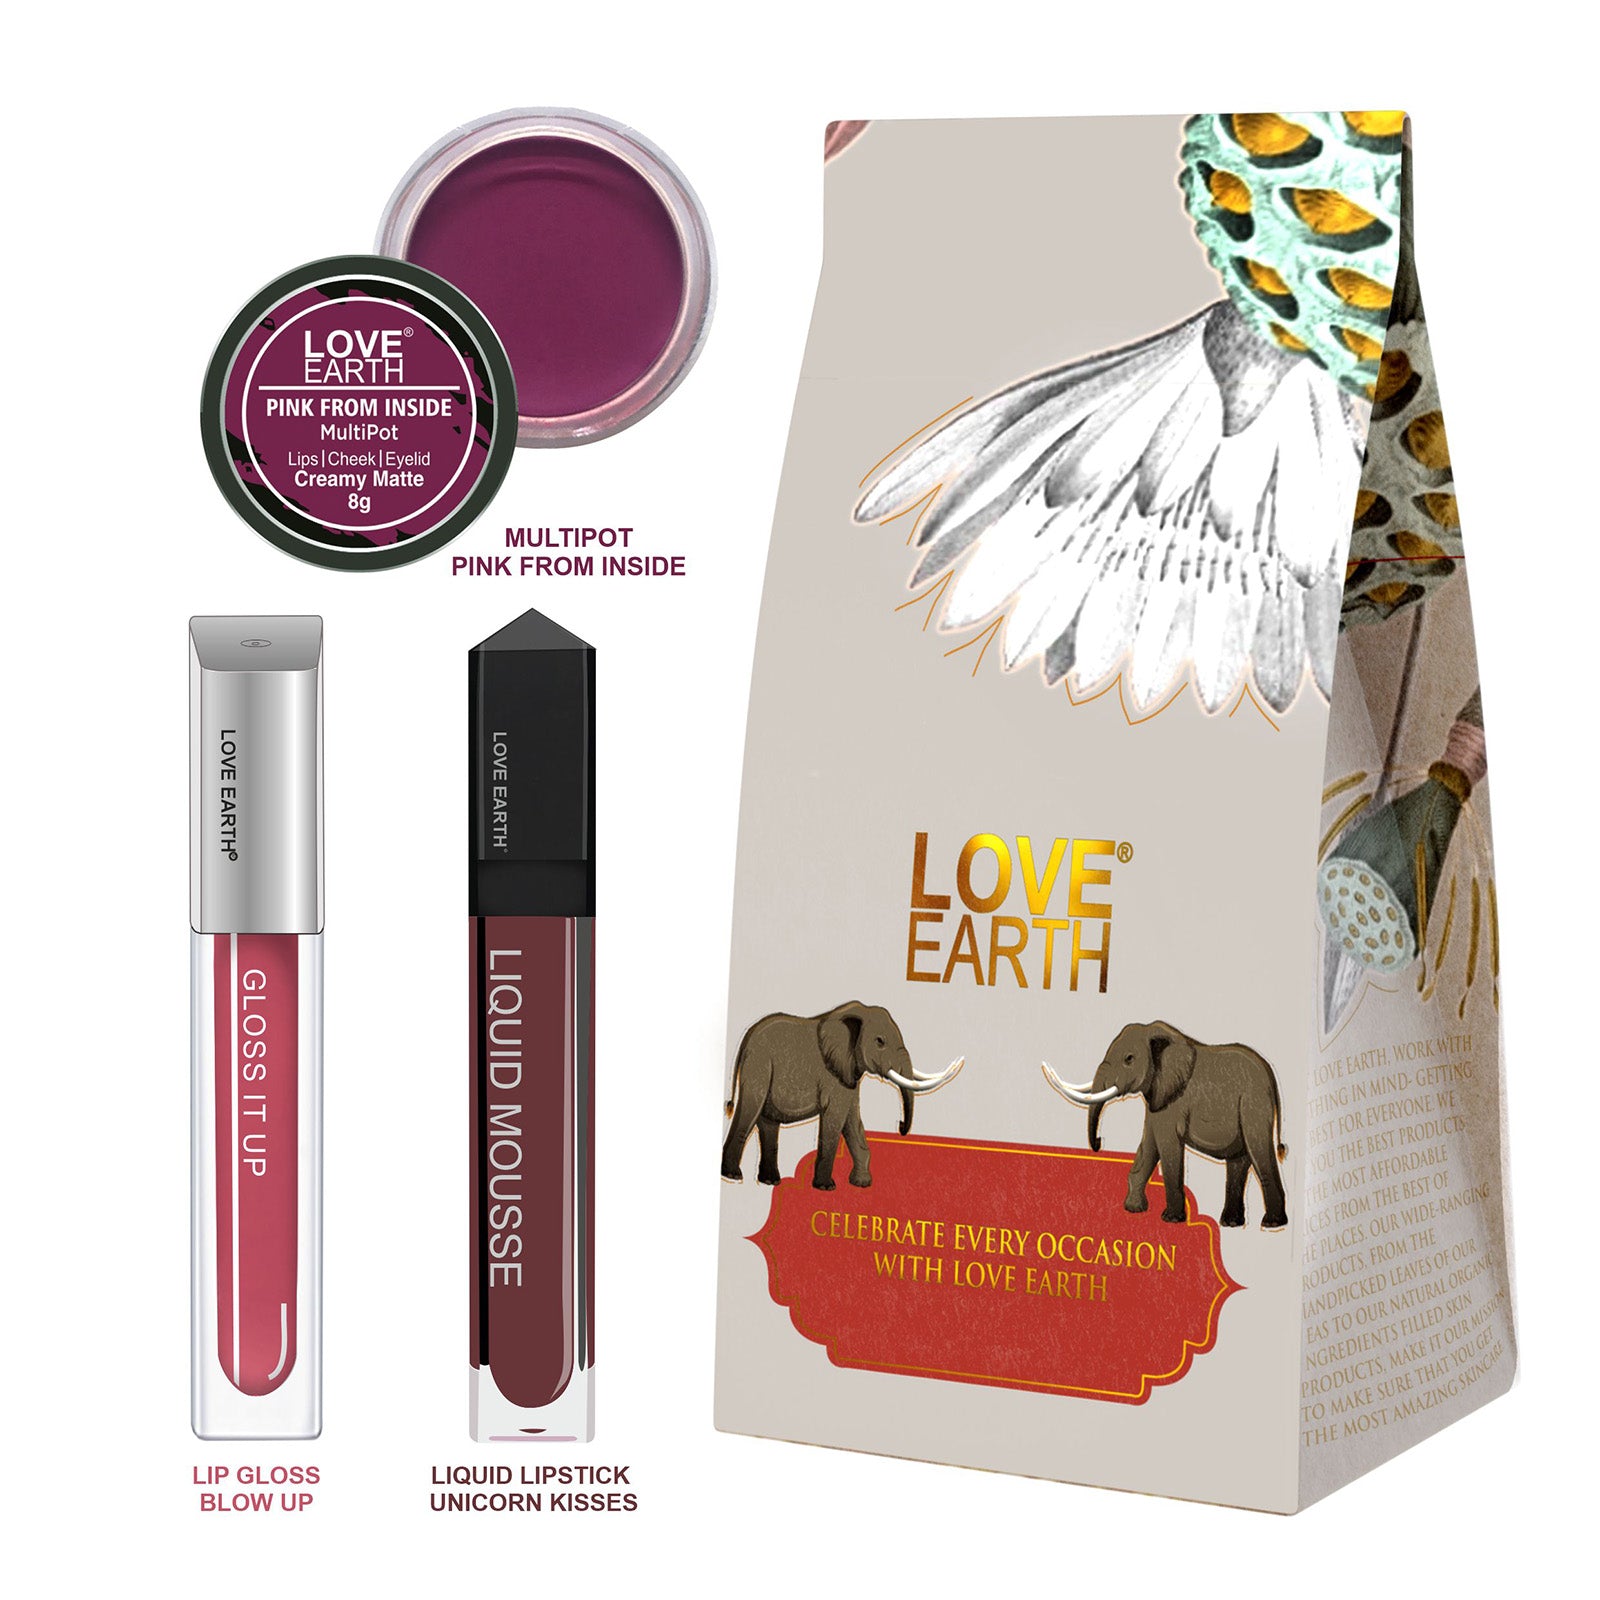 Lip And Cheek Tint Pink From Inside, Liquid Lipstick Unicorn Kisses & Lip Gloss Blow Up Gift Pack